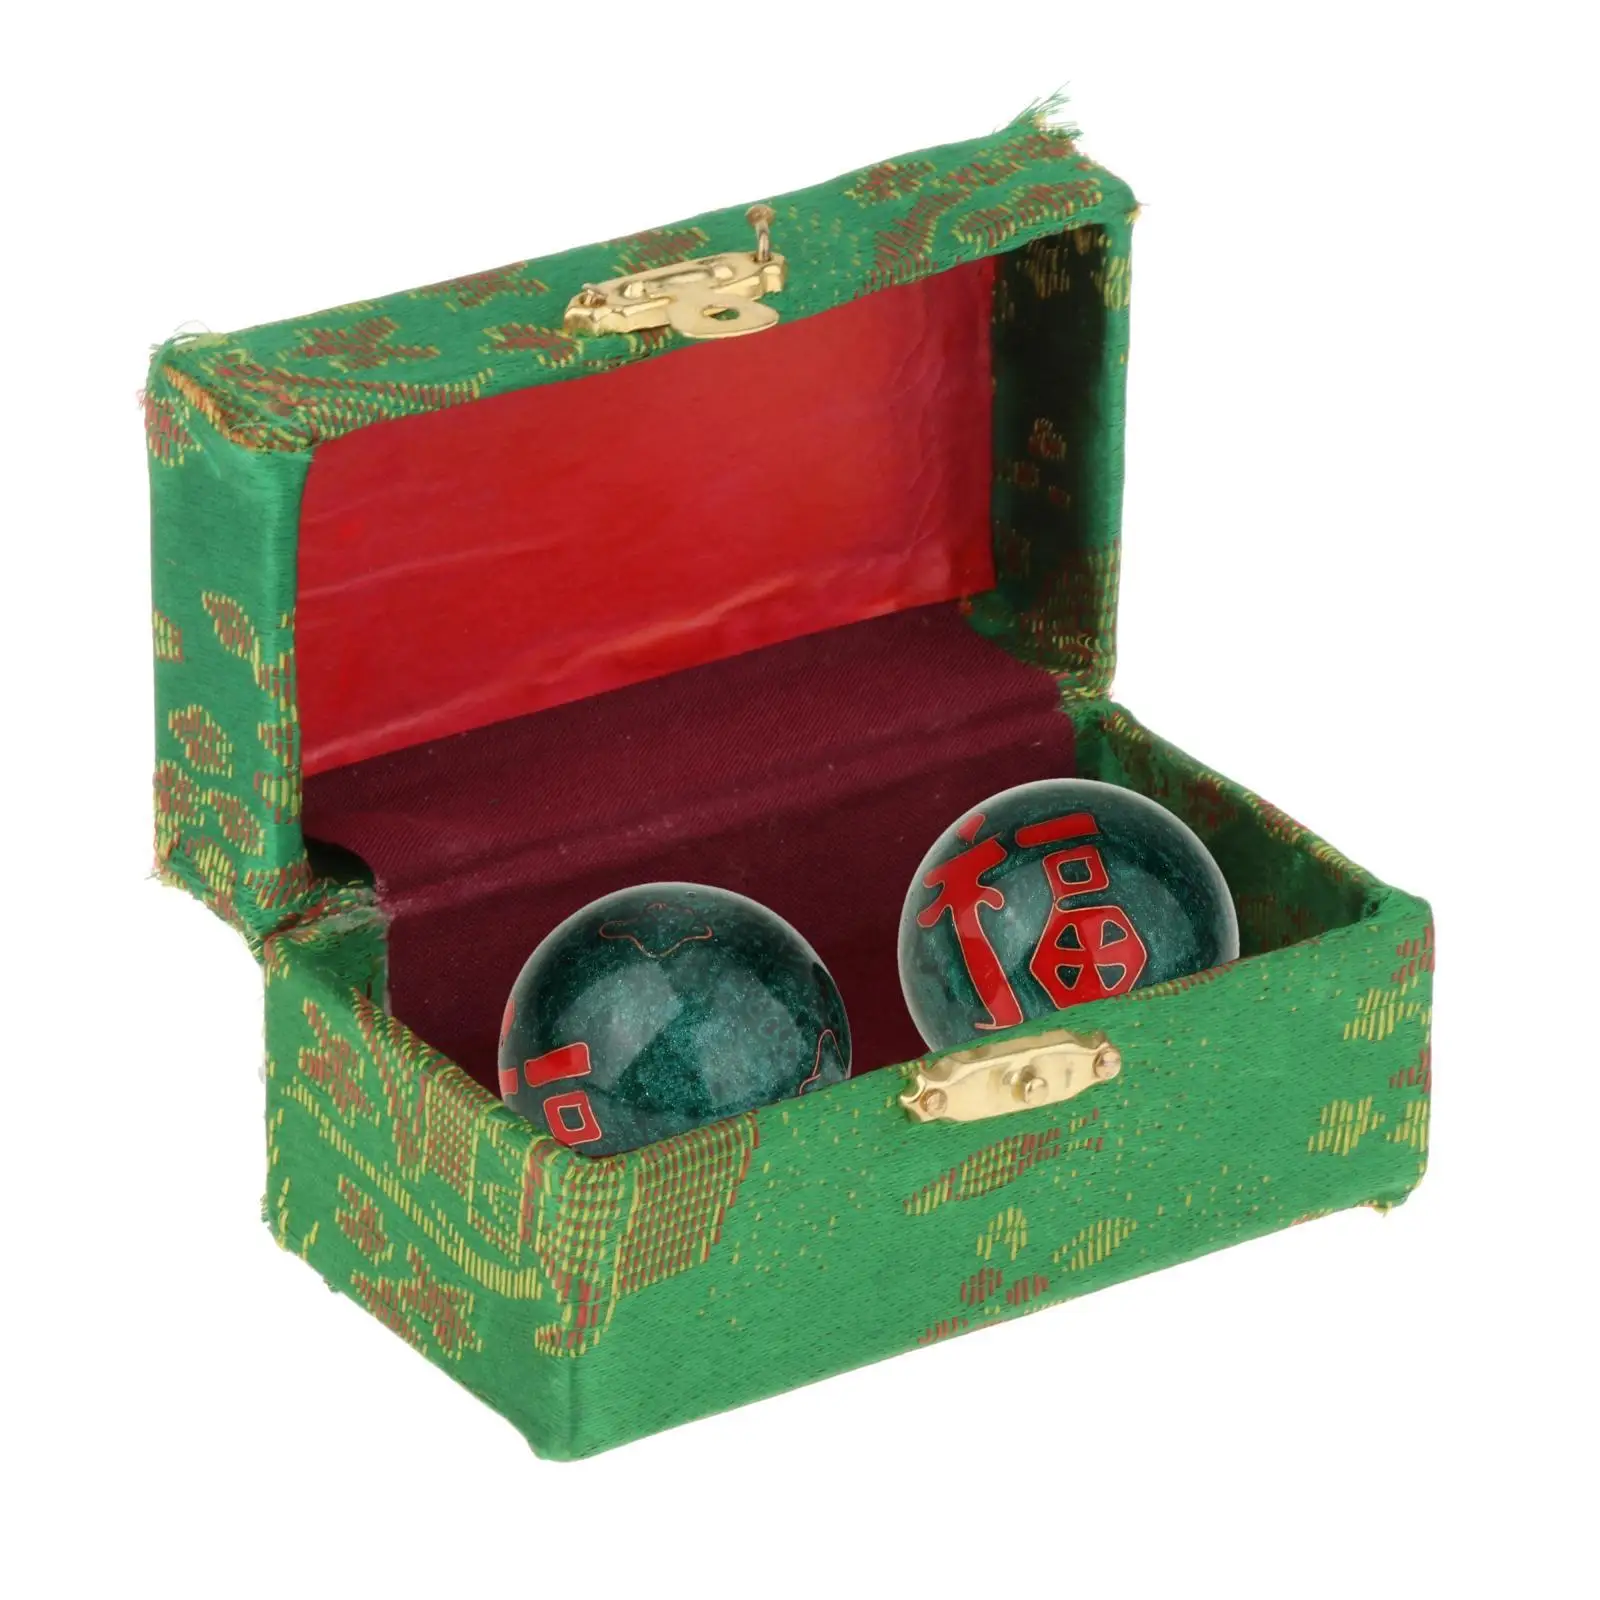 2x Massage Balls with Storage Box Portable Reusable Chinese Health Balls Chinese Baoding Balls for Parents Seniors Elderly